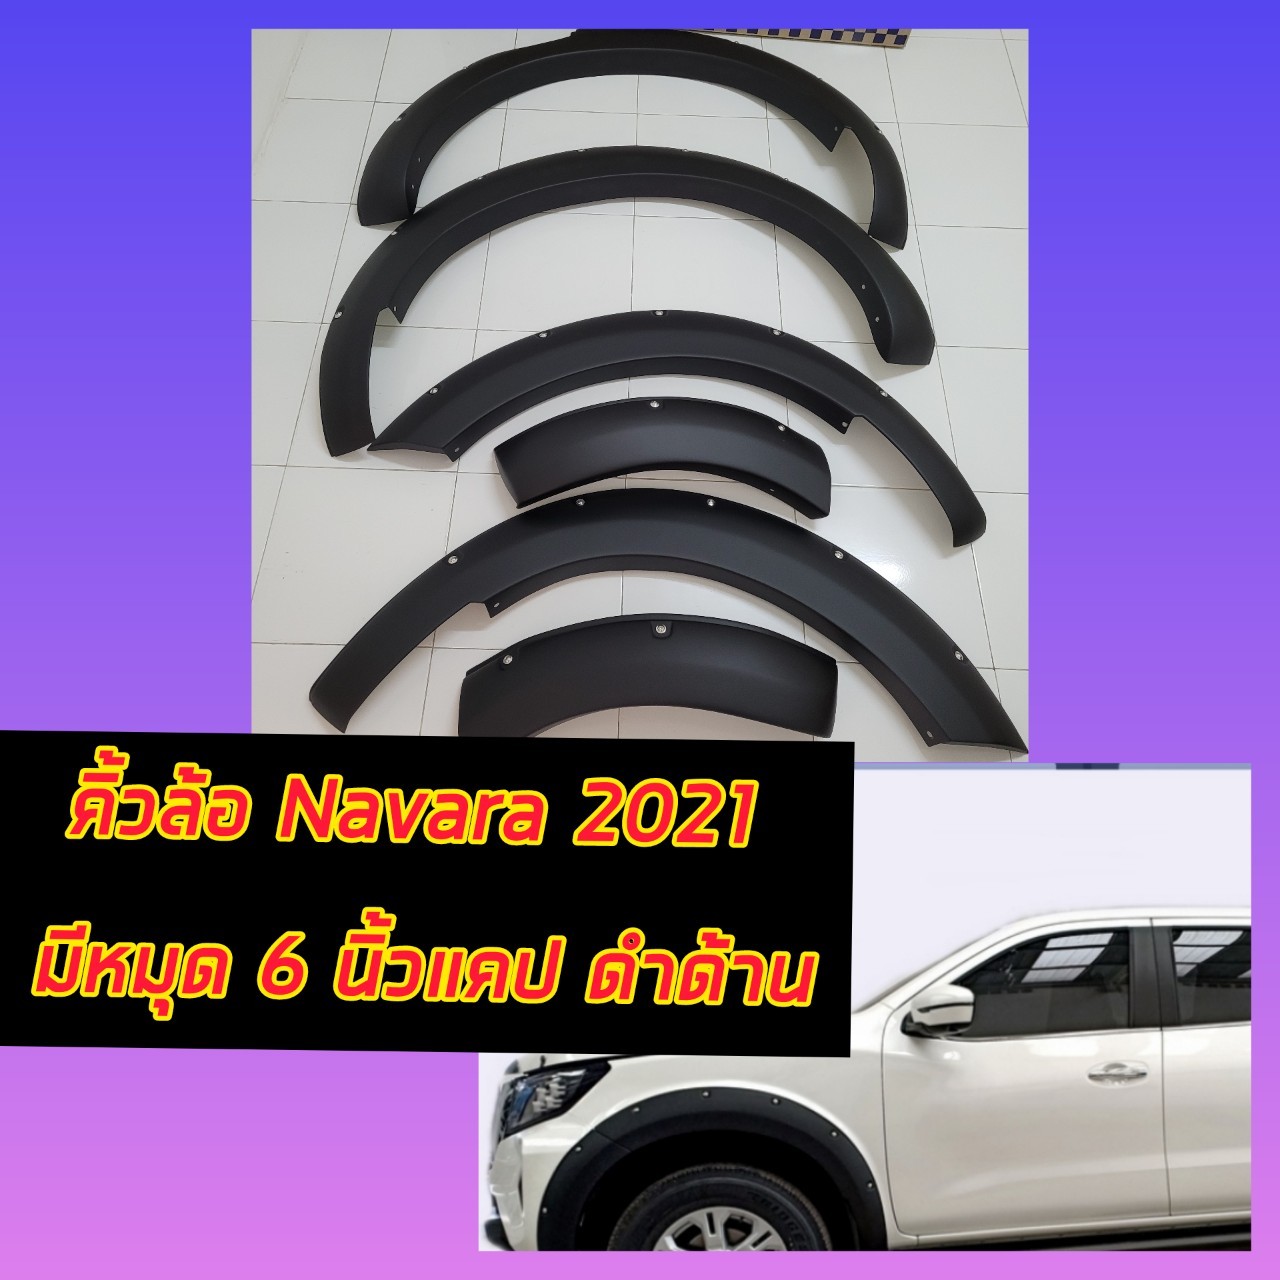 ( A.T RACING ) คิ้วล้อ โป่งล้อ Navara นาวาร่า 2021 ตัวล่าสุด  6นิ้ว สีดำด้าน มีหมุดหลอกสีเงิน ไม่ต้องเจาะรถ สำหรับรถแคป 2 ประตู